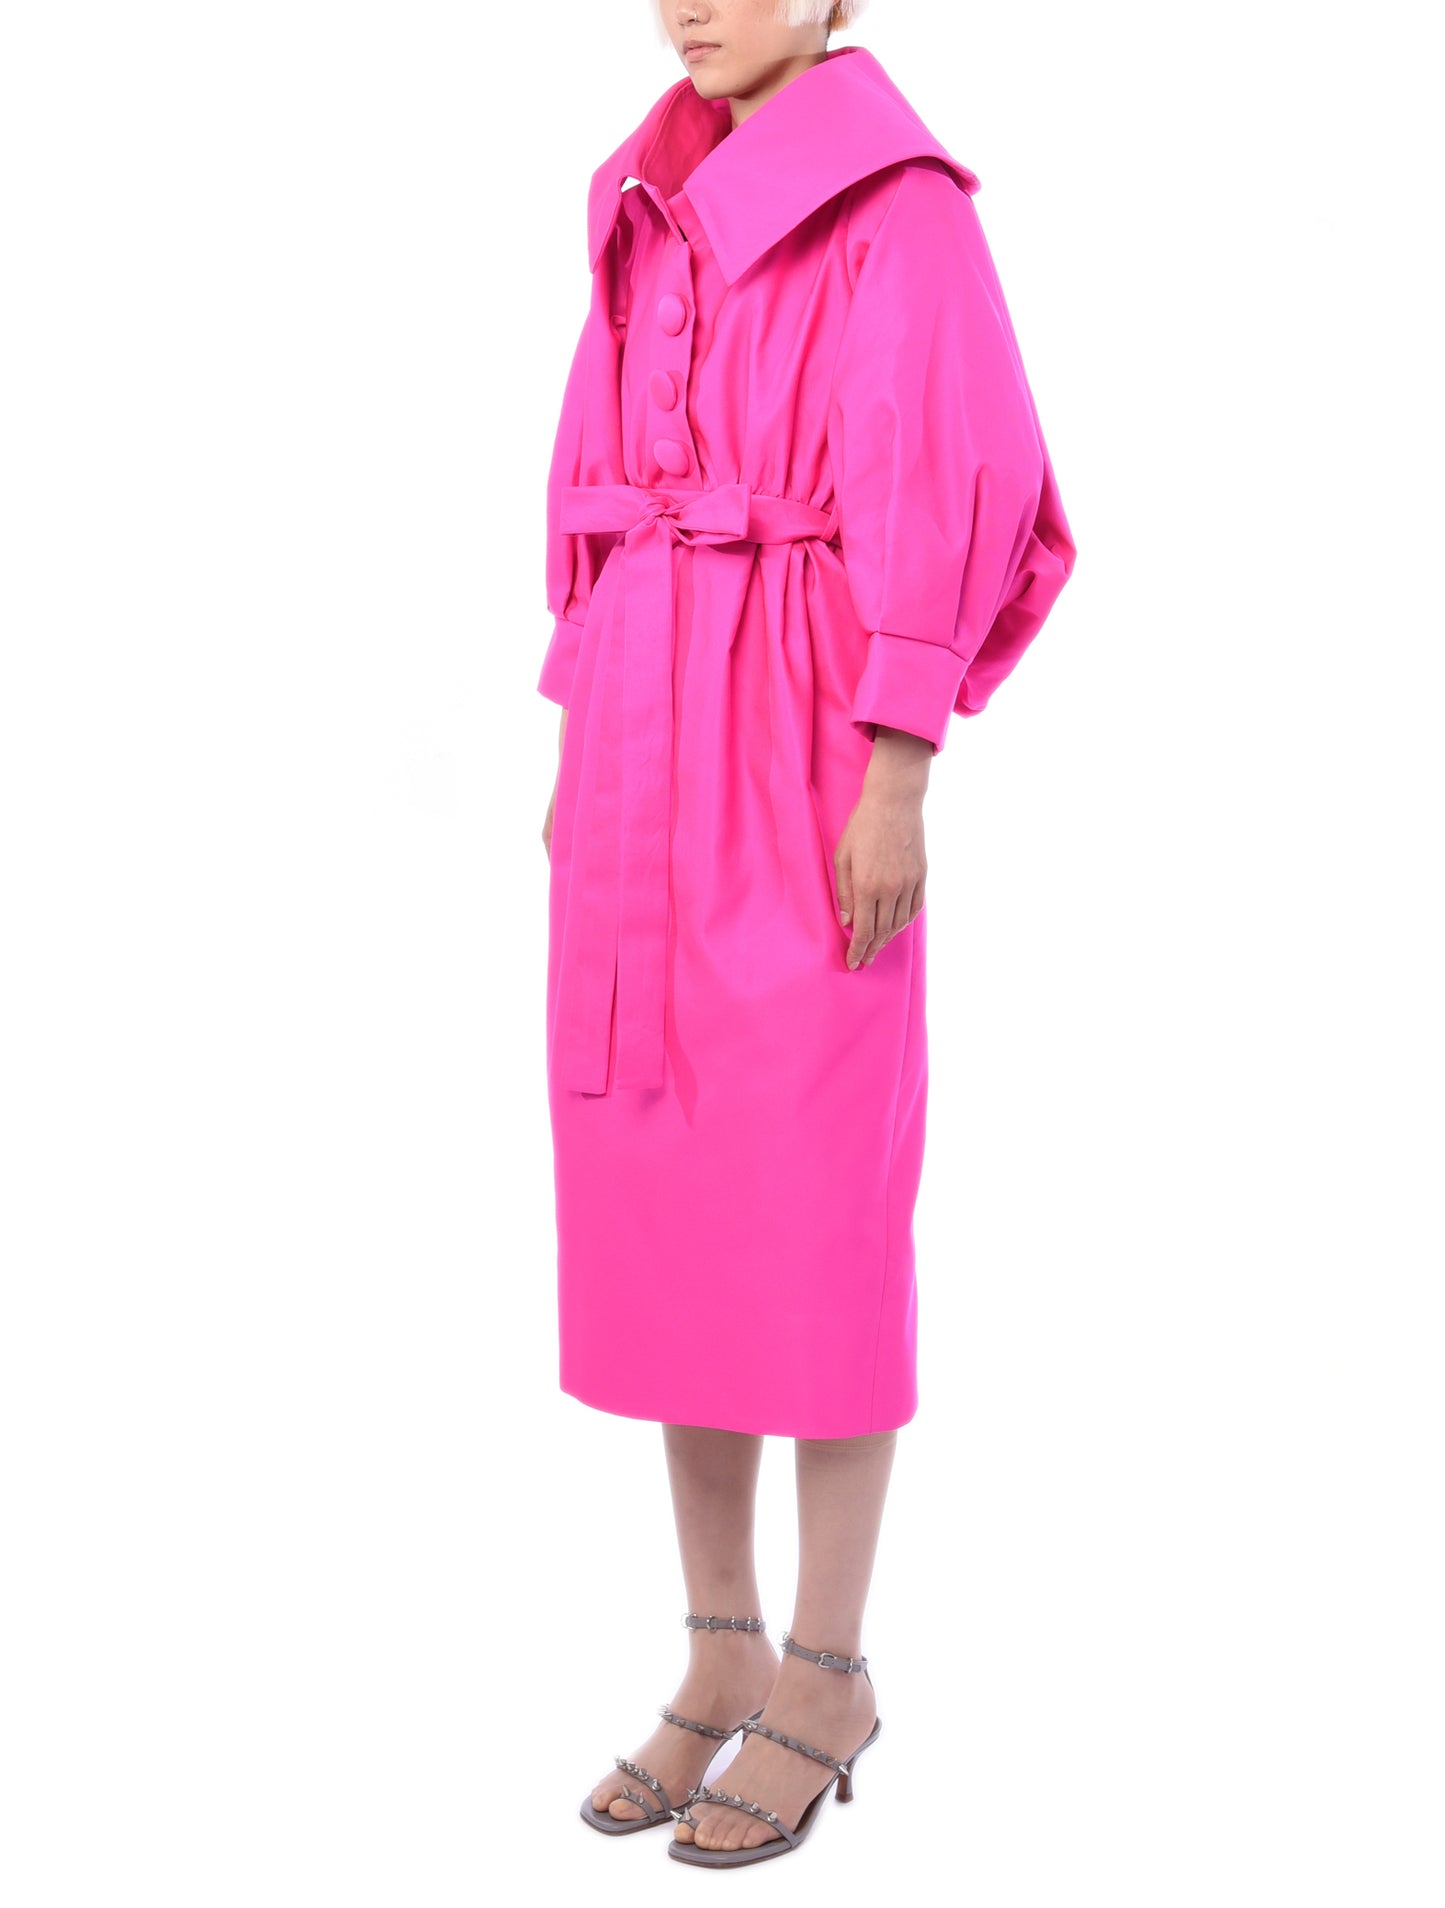 Richard Quinn Fuchsia Pink Dress Coat